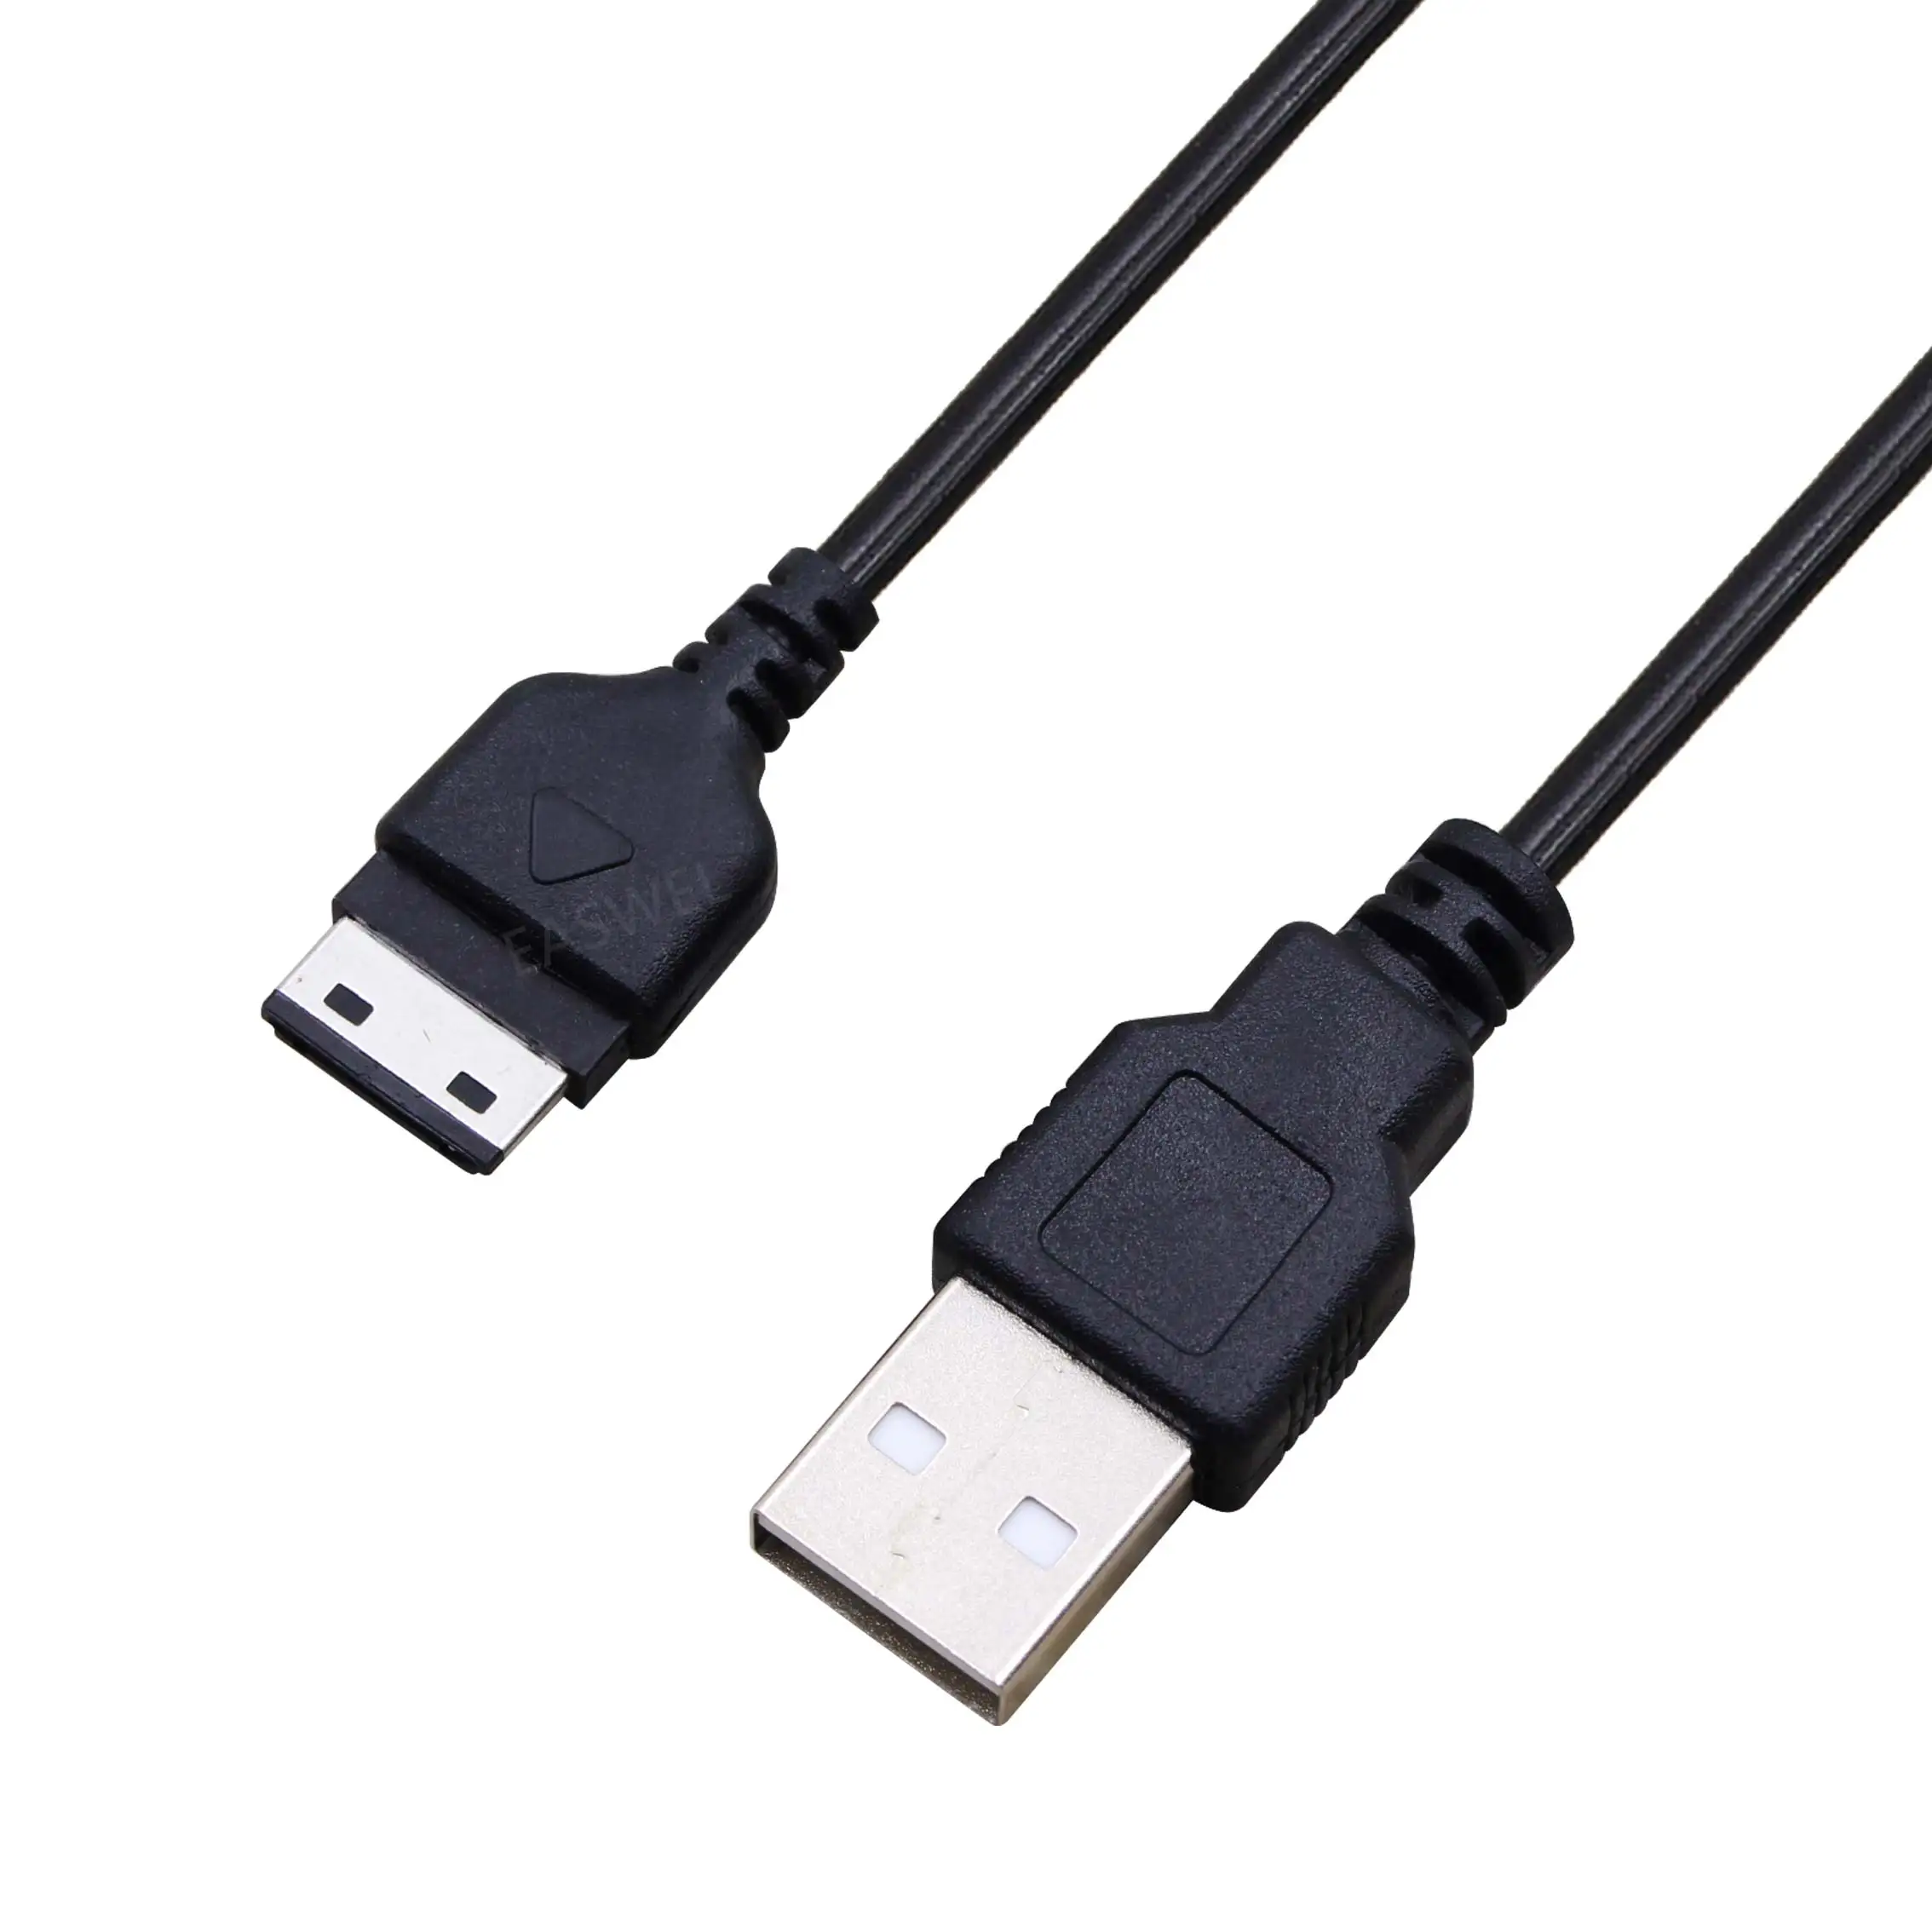 USB-кабель для зарядки и передачи данных Samsung sgh-a827 sgh-a837 sgh-a867 sgh-a877 | Электроника